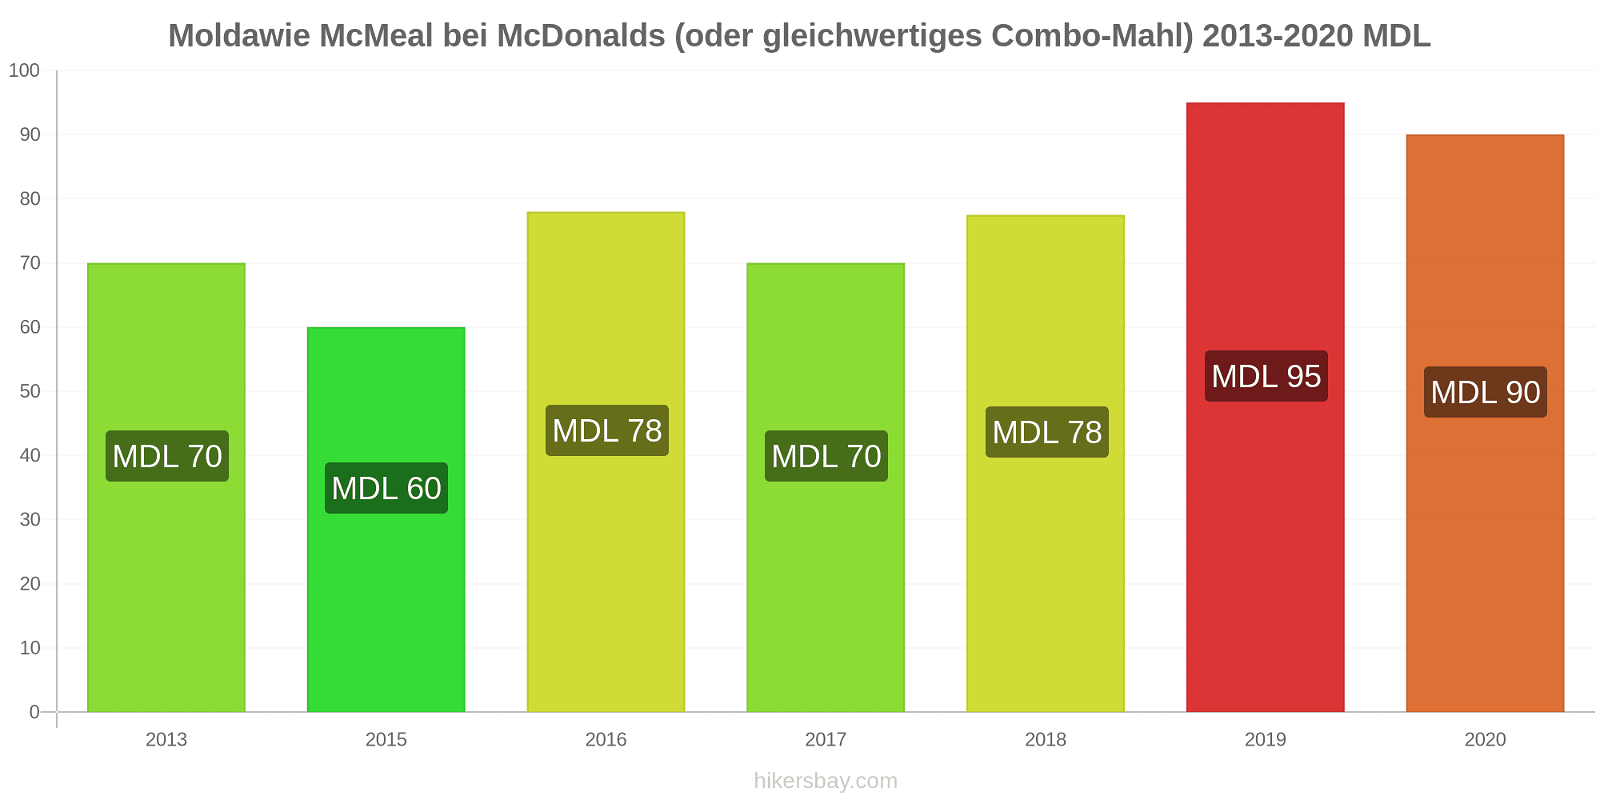 Moldawie Preisänderungen McMeal bei McDonalds (oder gleichwertige Combo Meal) hikersbay.com